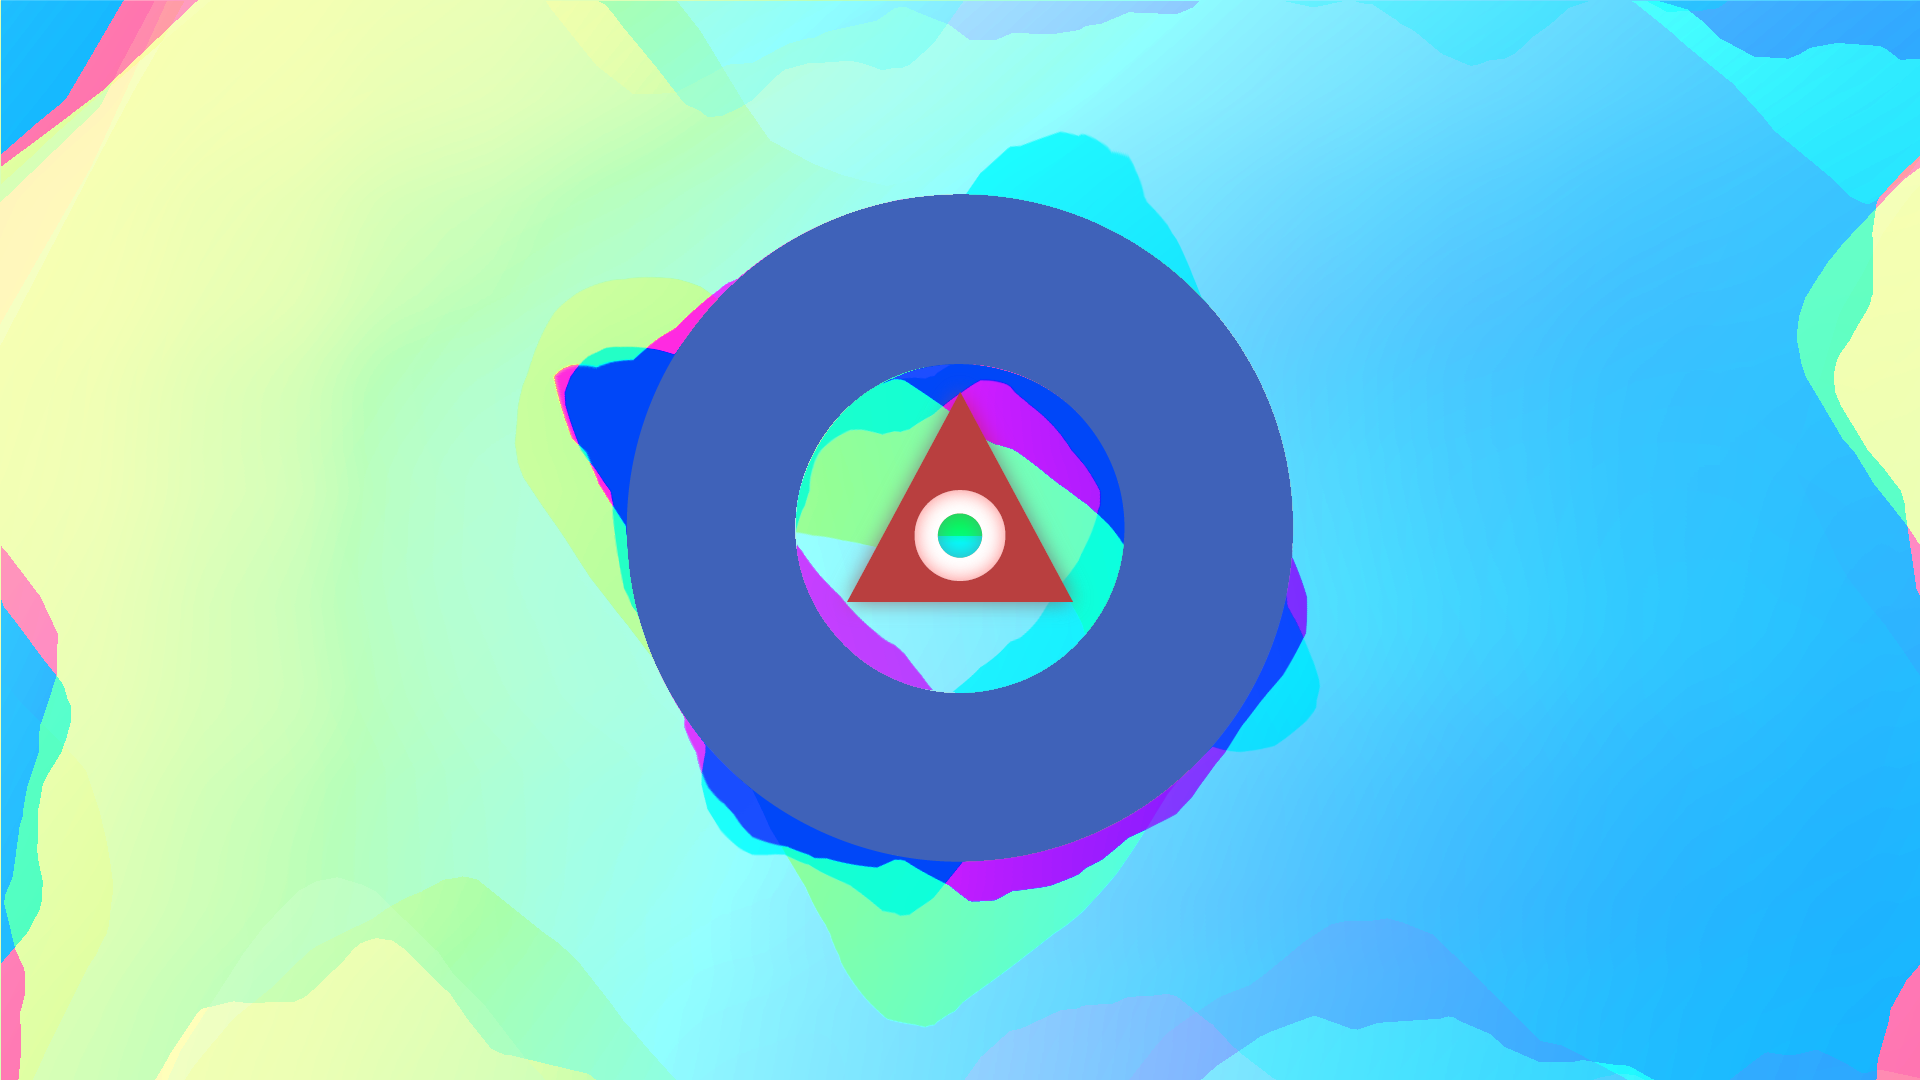 General 1920x1080 glitch art abstract digital art triangle circle